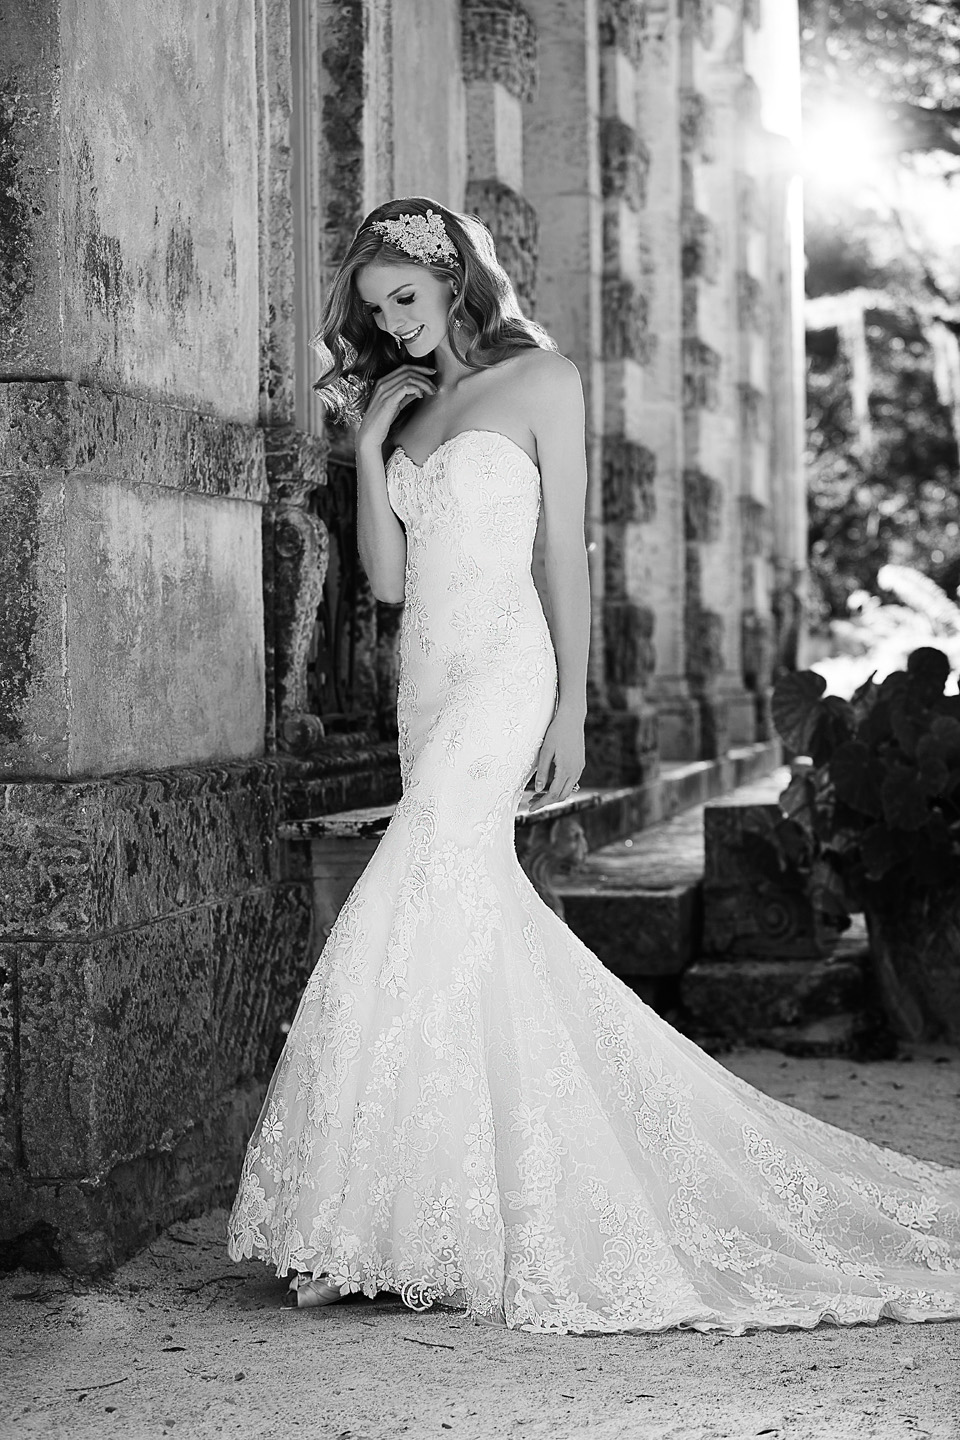 Introducing The Martina Liana 2016 Bridalwear Collection | Love My ...